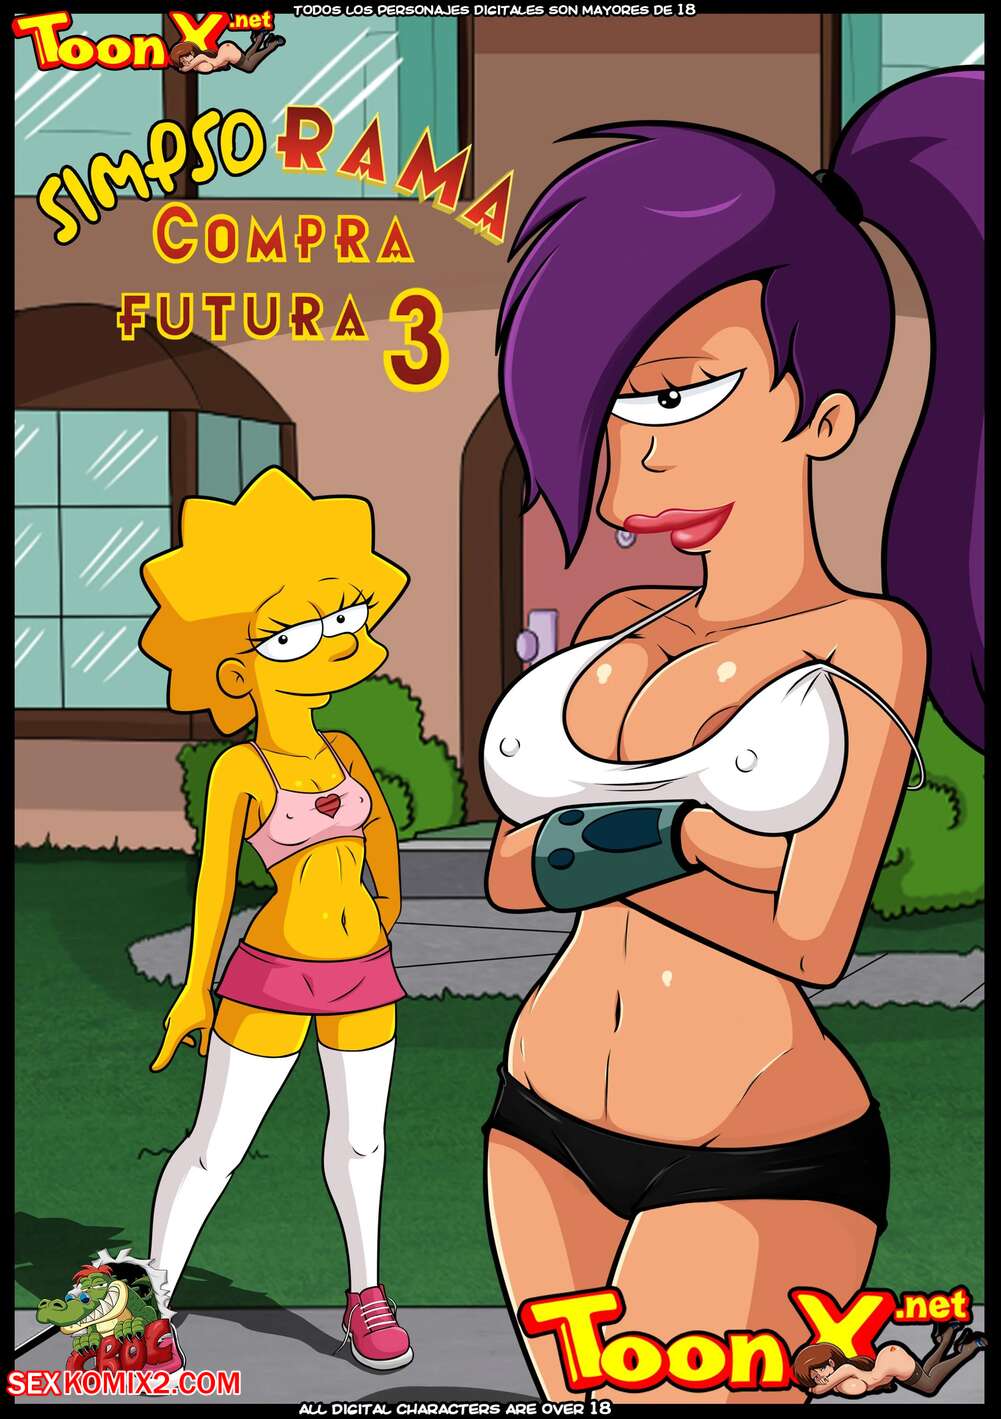 Rama Xxx - âœ…ï¸ Porn comic SimpsoRama. Chapter 3. The Simpsons , Futurama. Croc. Sex  comic beauty woke up | Porn comics in English for adults only |  sexkomix2.com